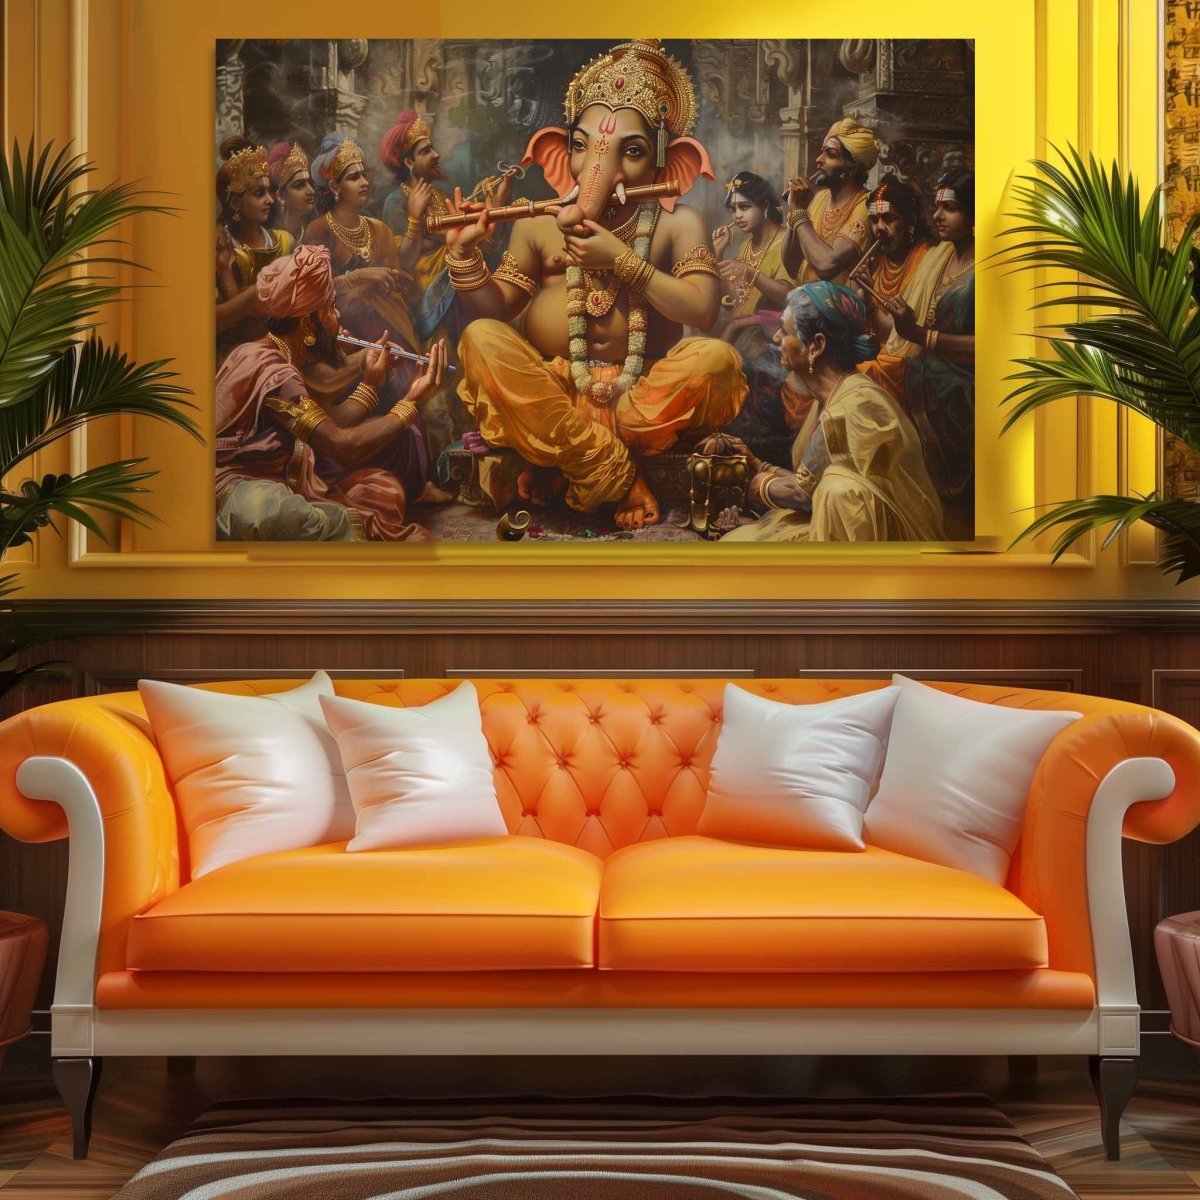 Ganesha:The Divine Ensemble Canvas Wall Painting (36 x 24 Inches)